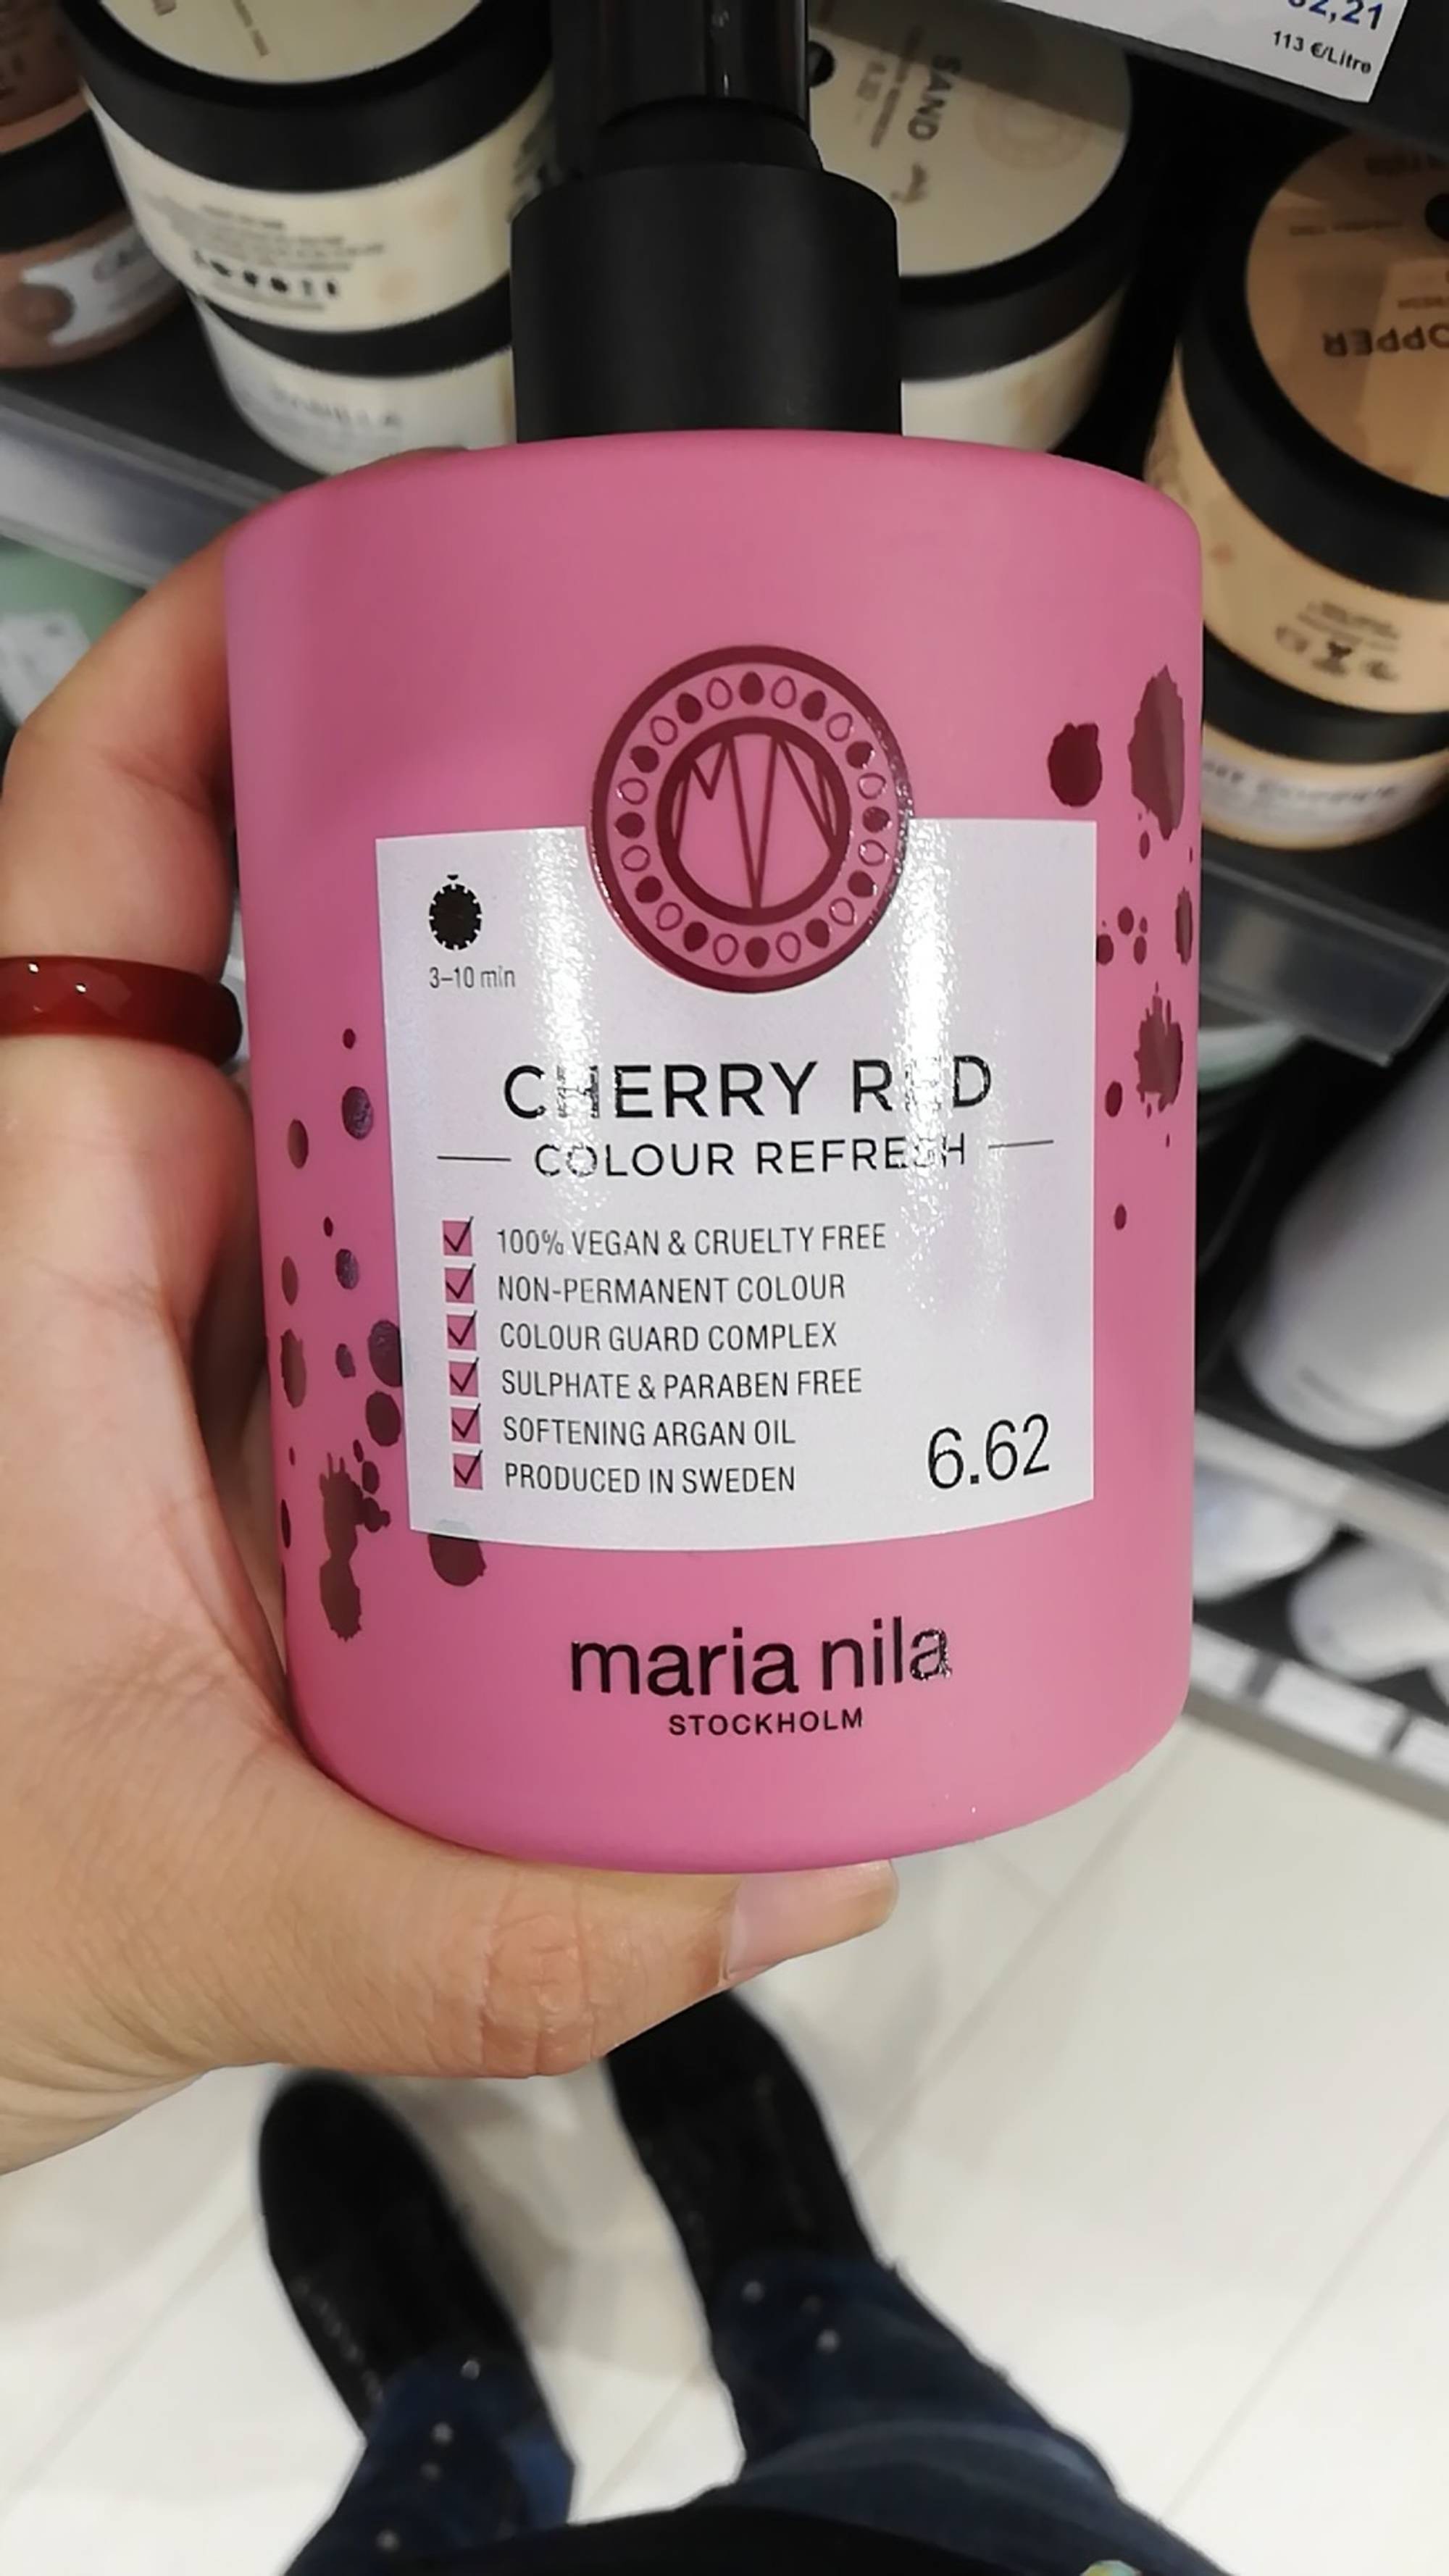 MARIA NILA - Cherry red - Colour refresh